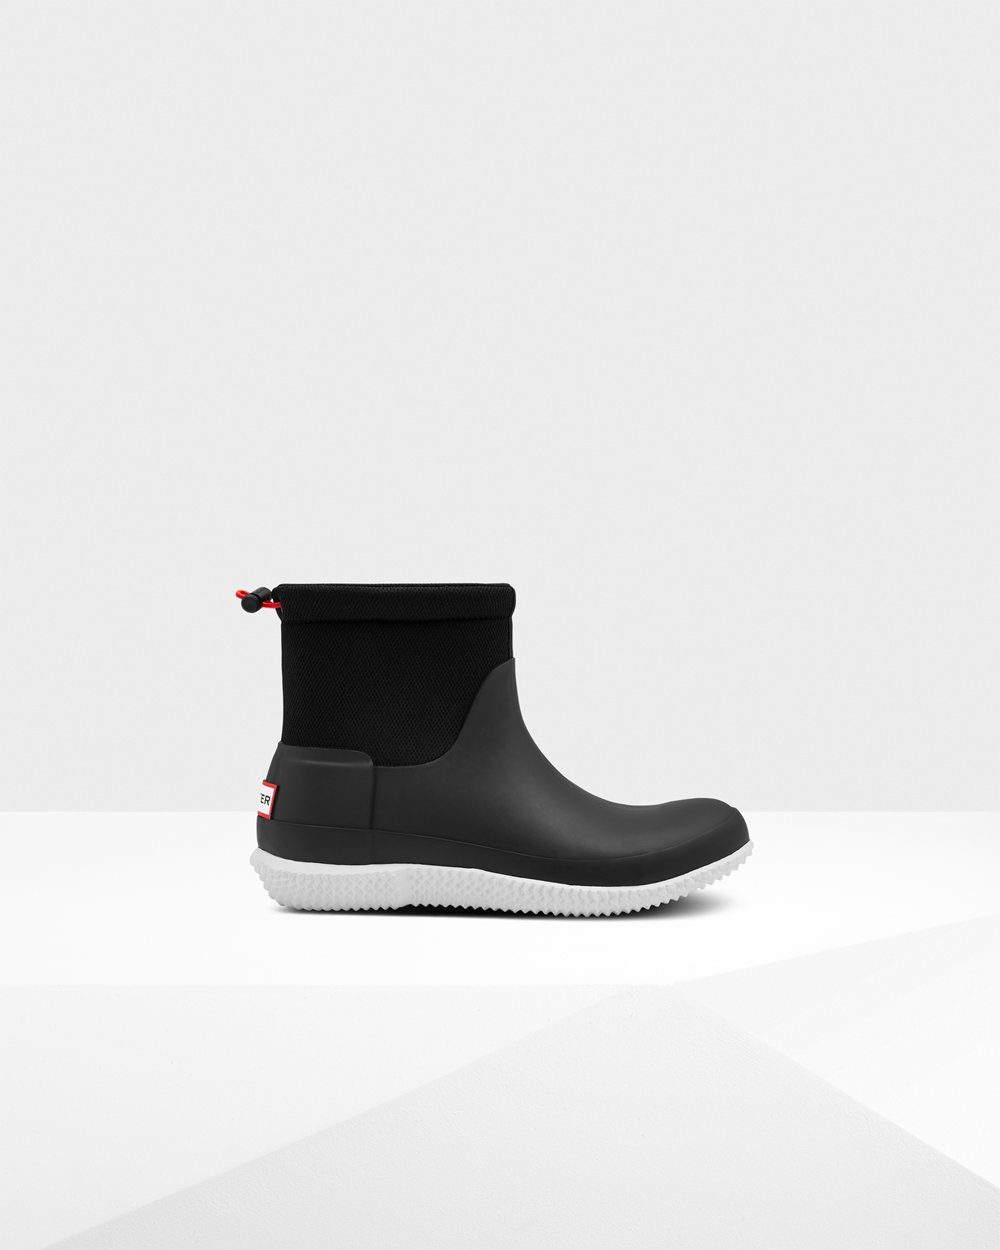 Sneakers Damske - Hunter Original Short Mesh Boots - Čierne - QAGWKXV-24